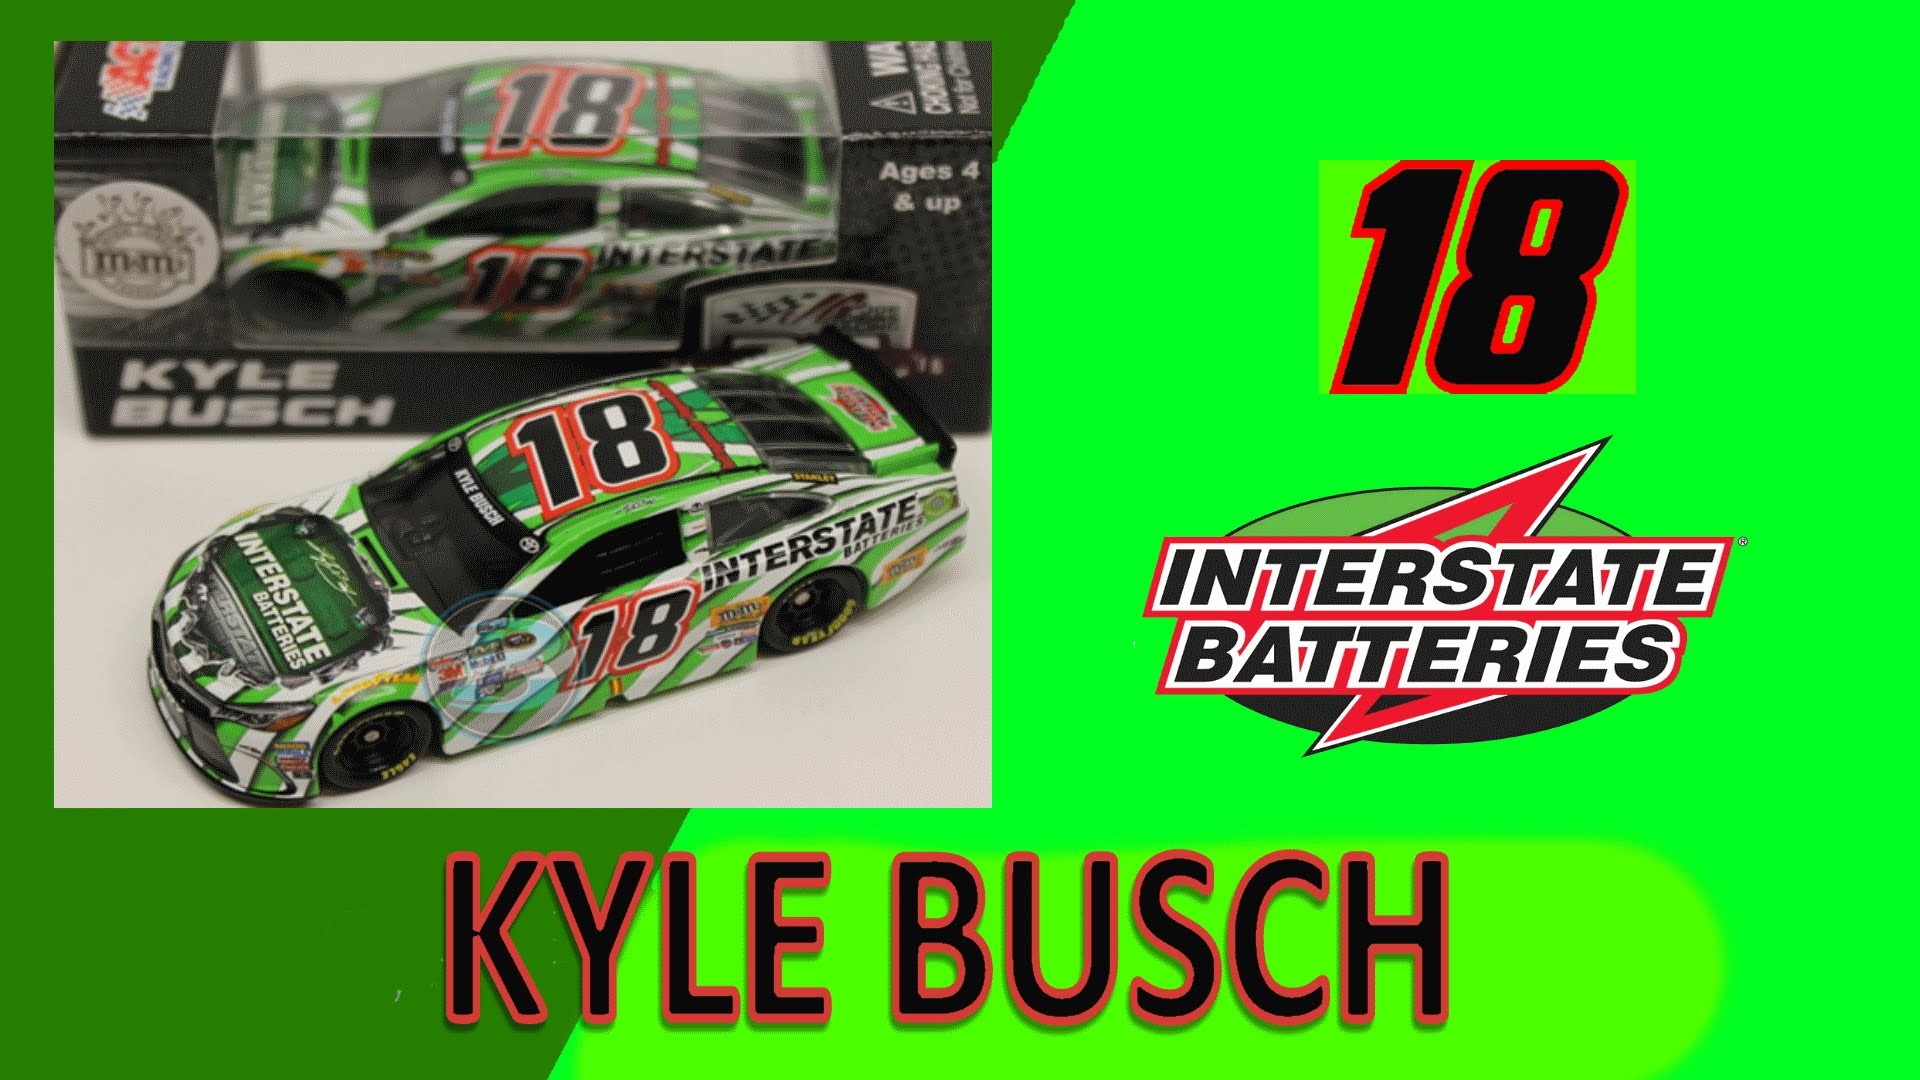 1920x1080 NASCAR DieCast Review Kyle Busch INTERSTATE BATTERIES 2016 1:64 - YouTube